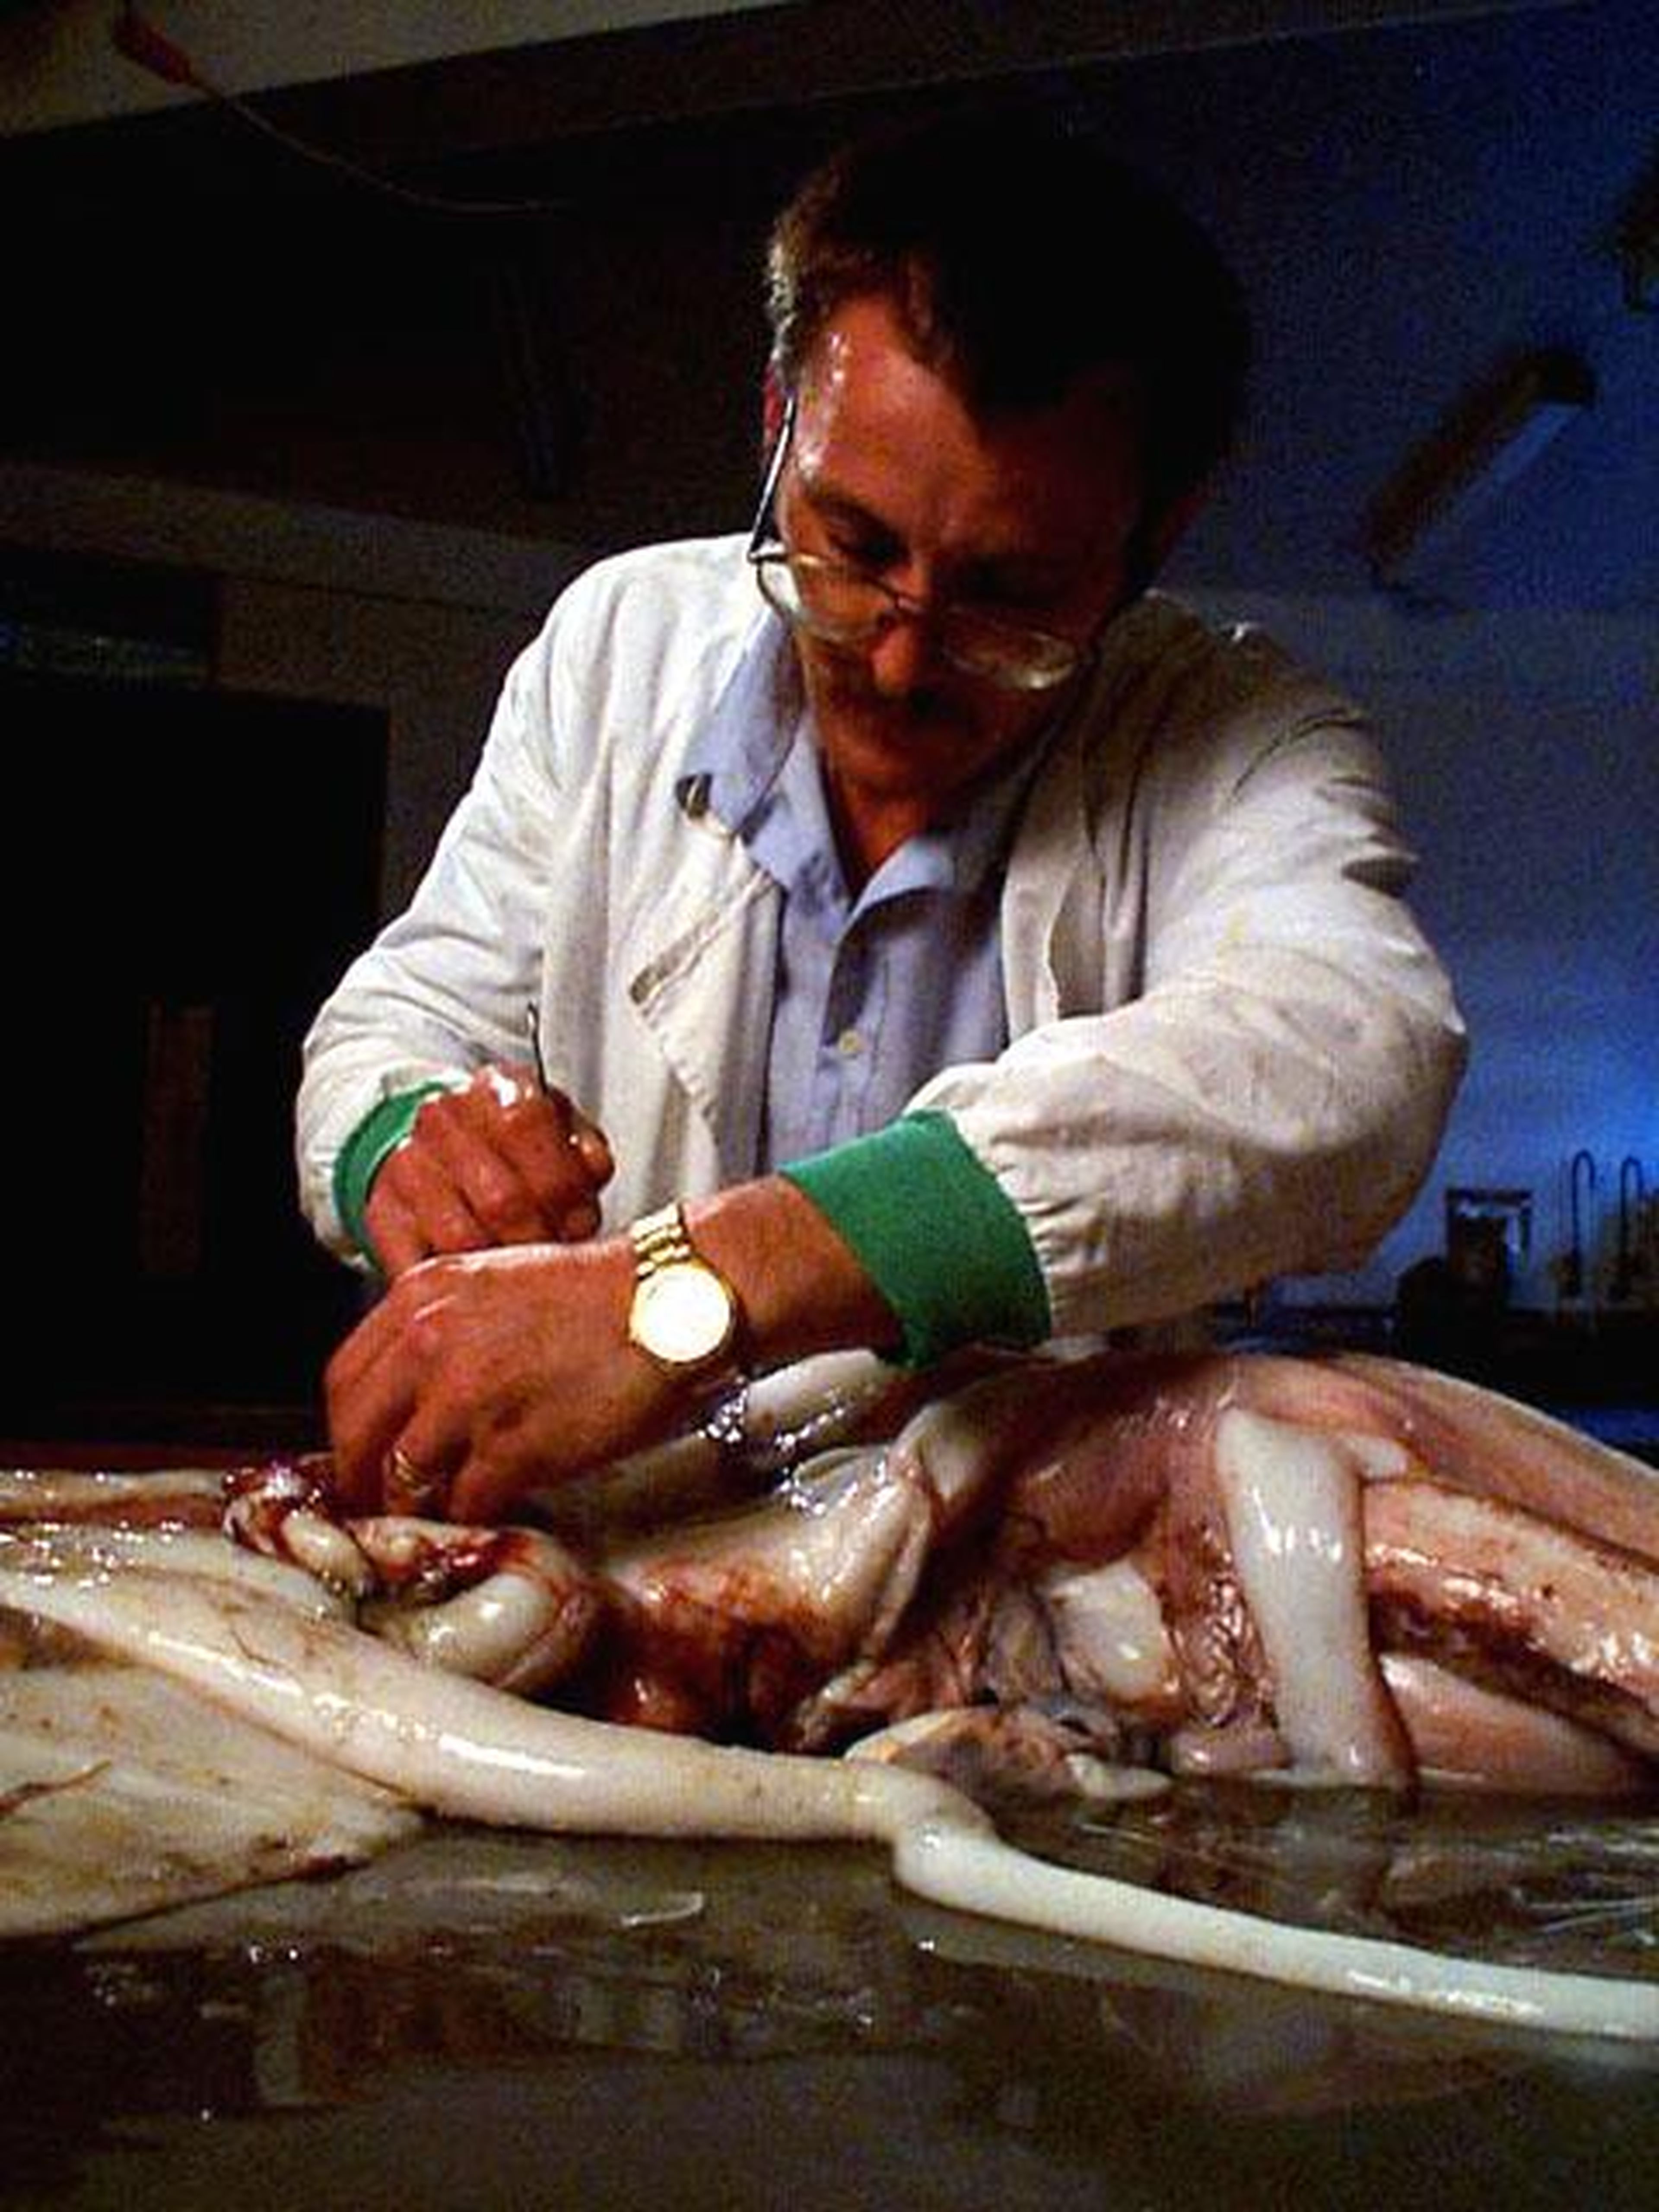 Steve O'Shea diseccionando un calamar.